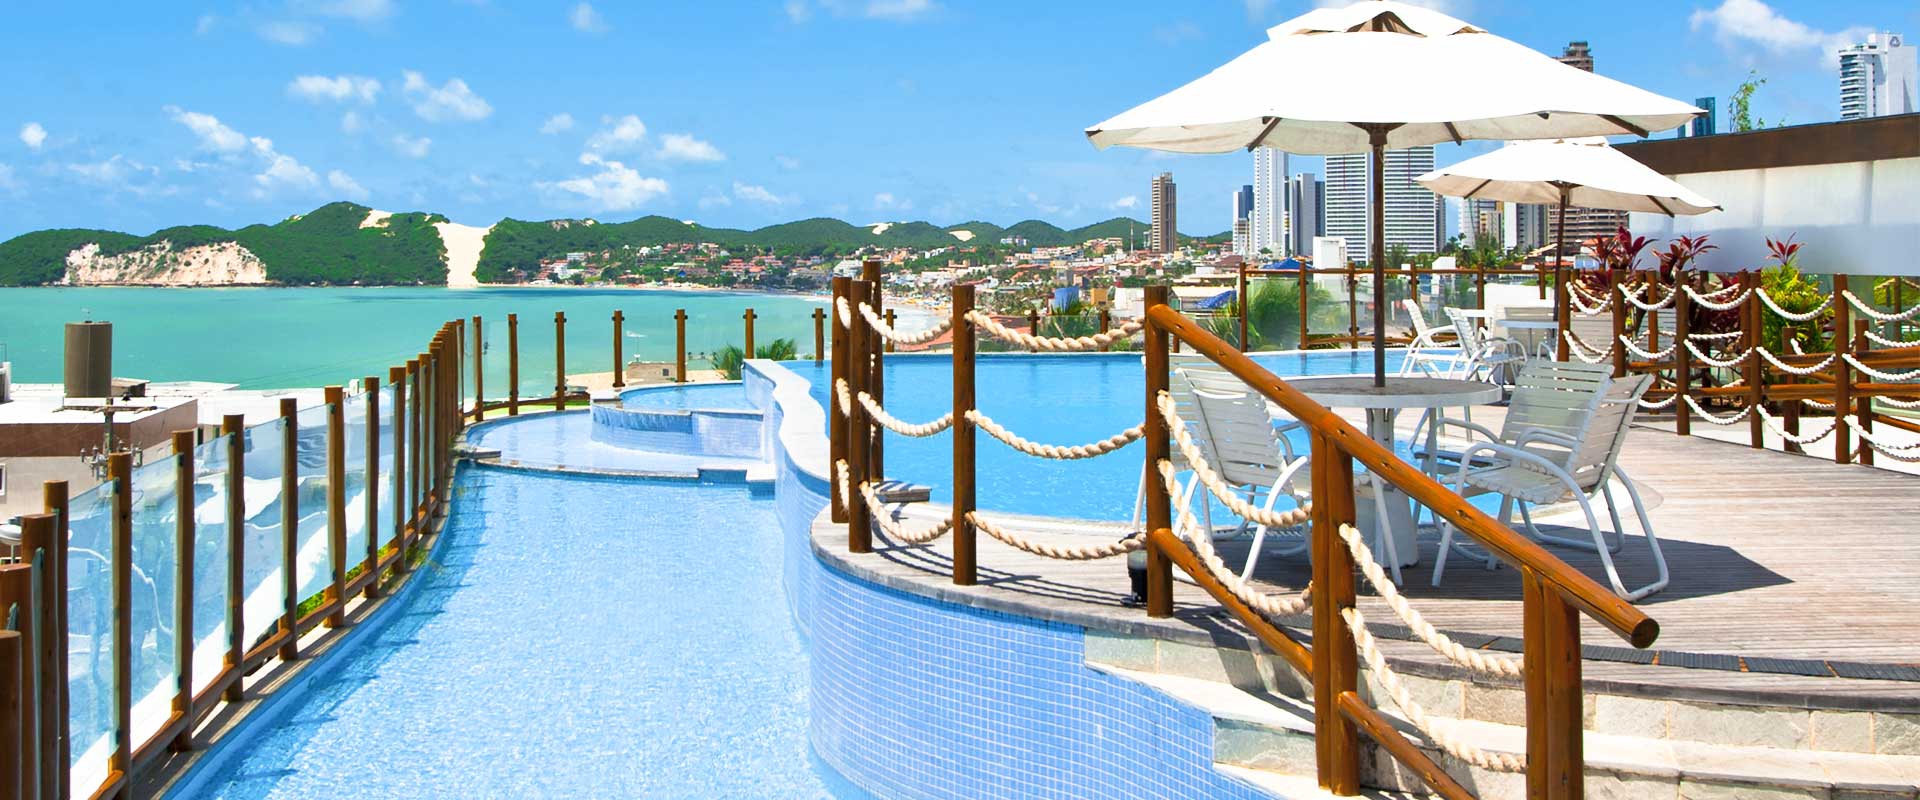 Pontalmar Praia Hotel – Natal – RN